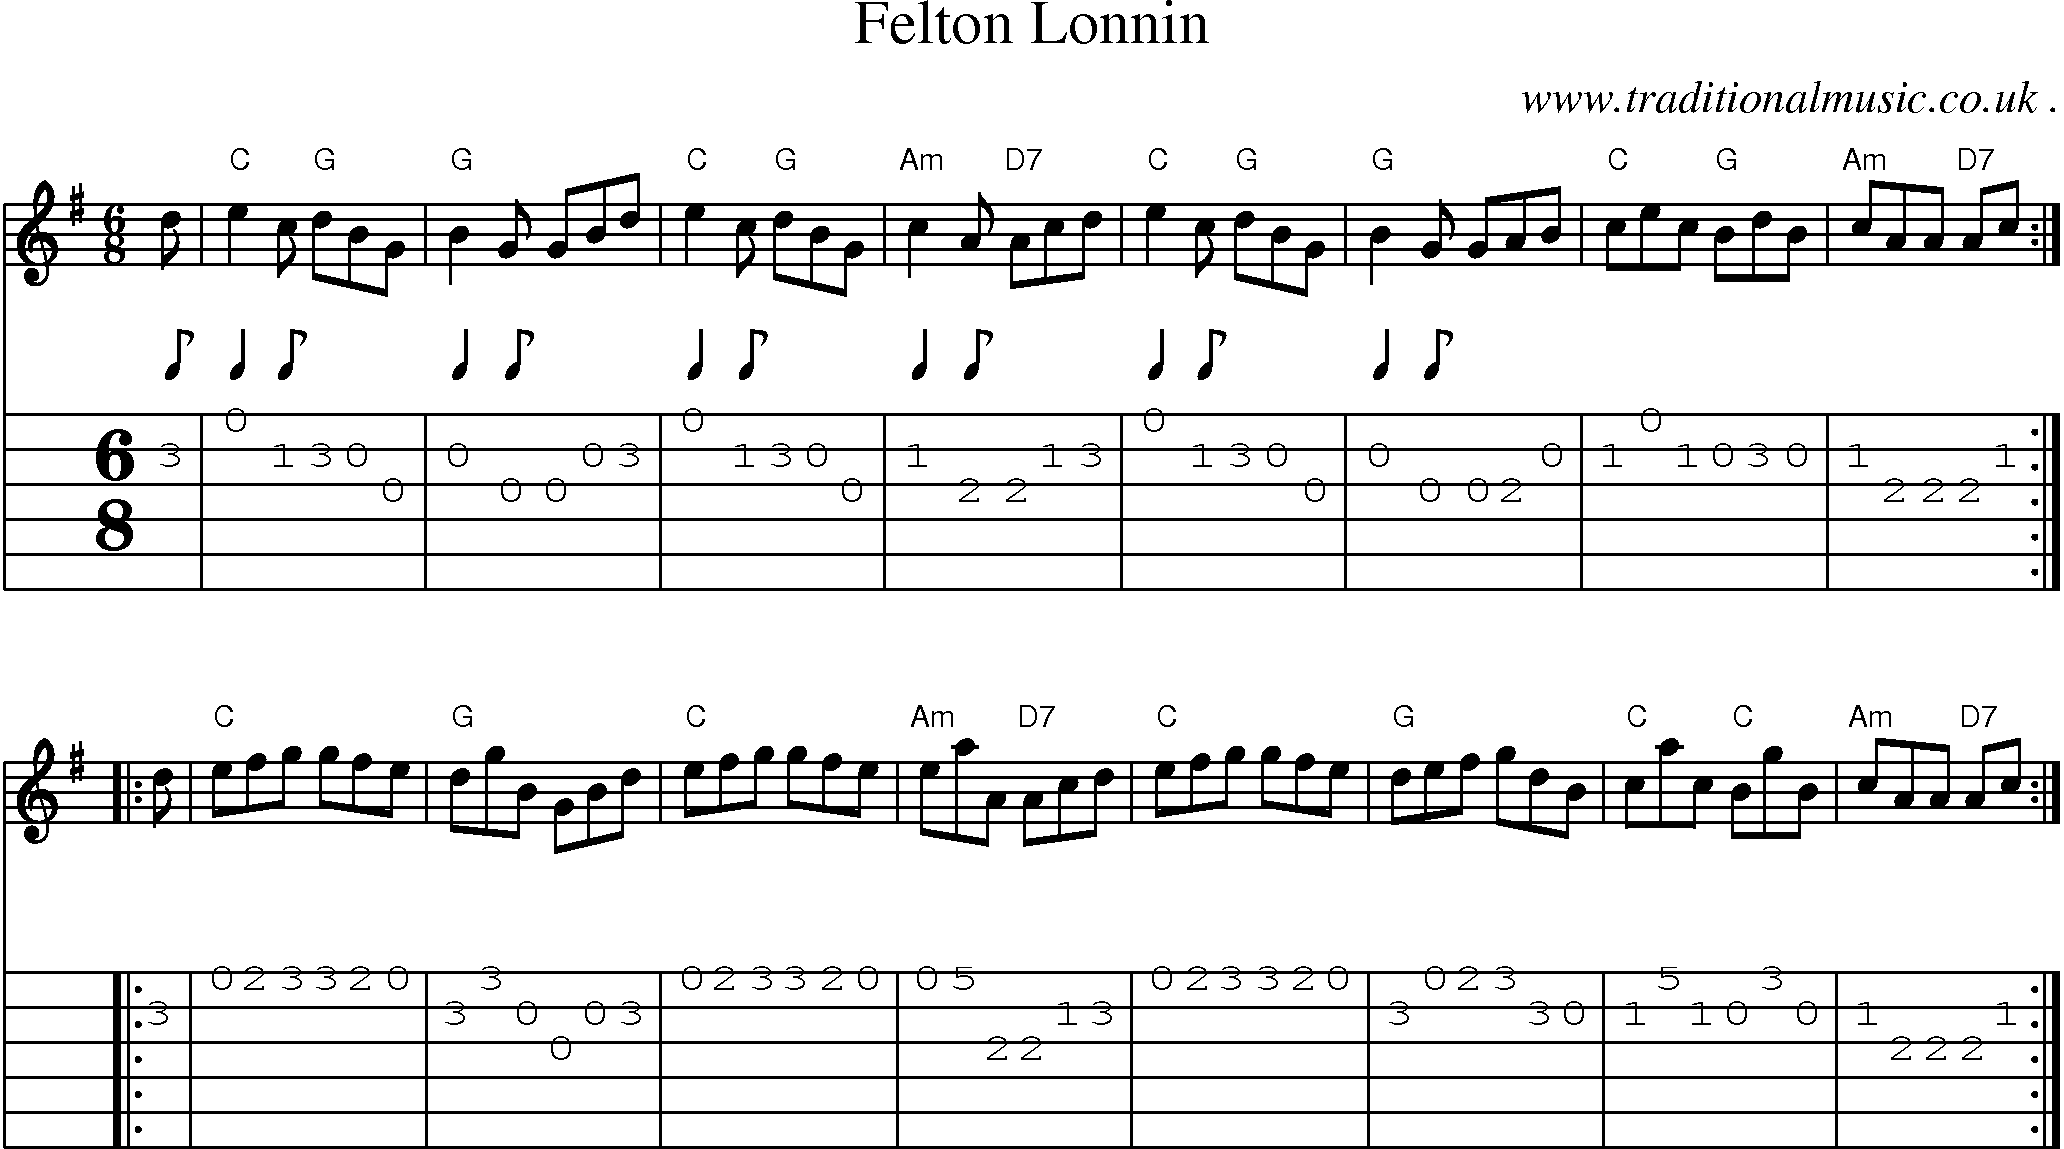 Sheet-music  score, Chords and Guitar Tabs for Felton Lonnin